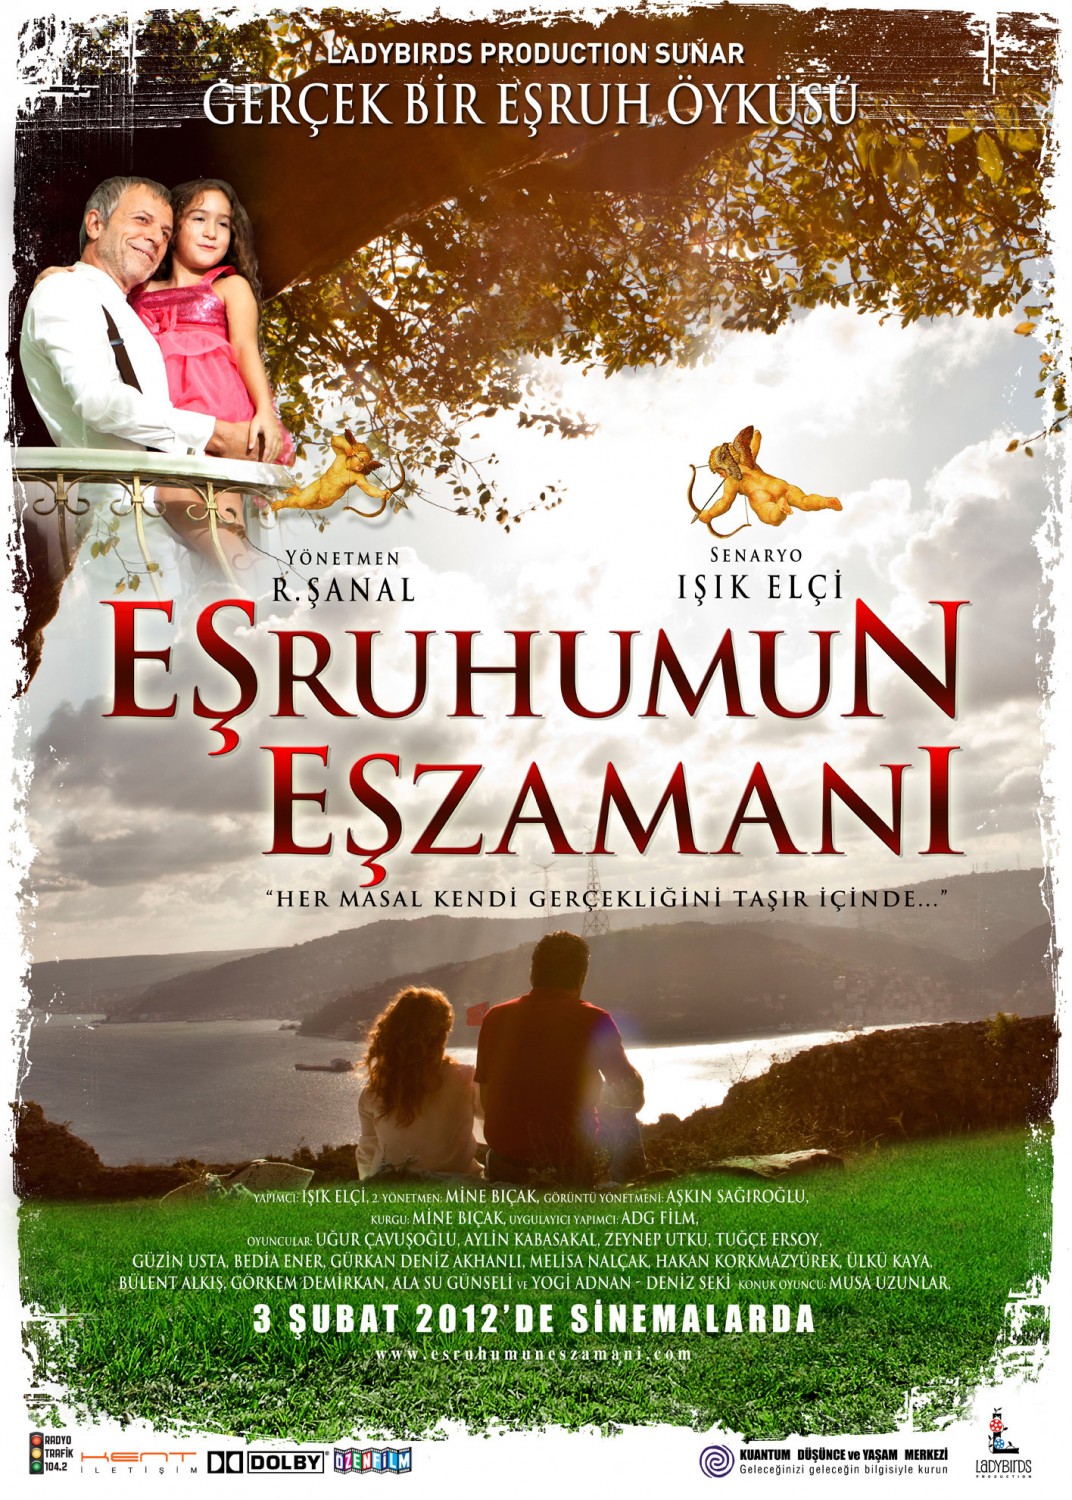 Extra Large Movie Poster Image for Esruhumun eszamani 